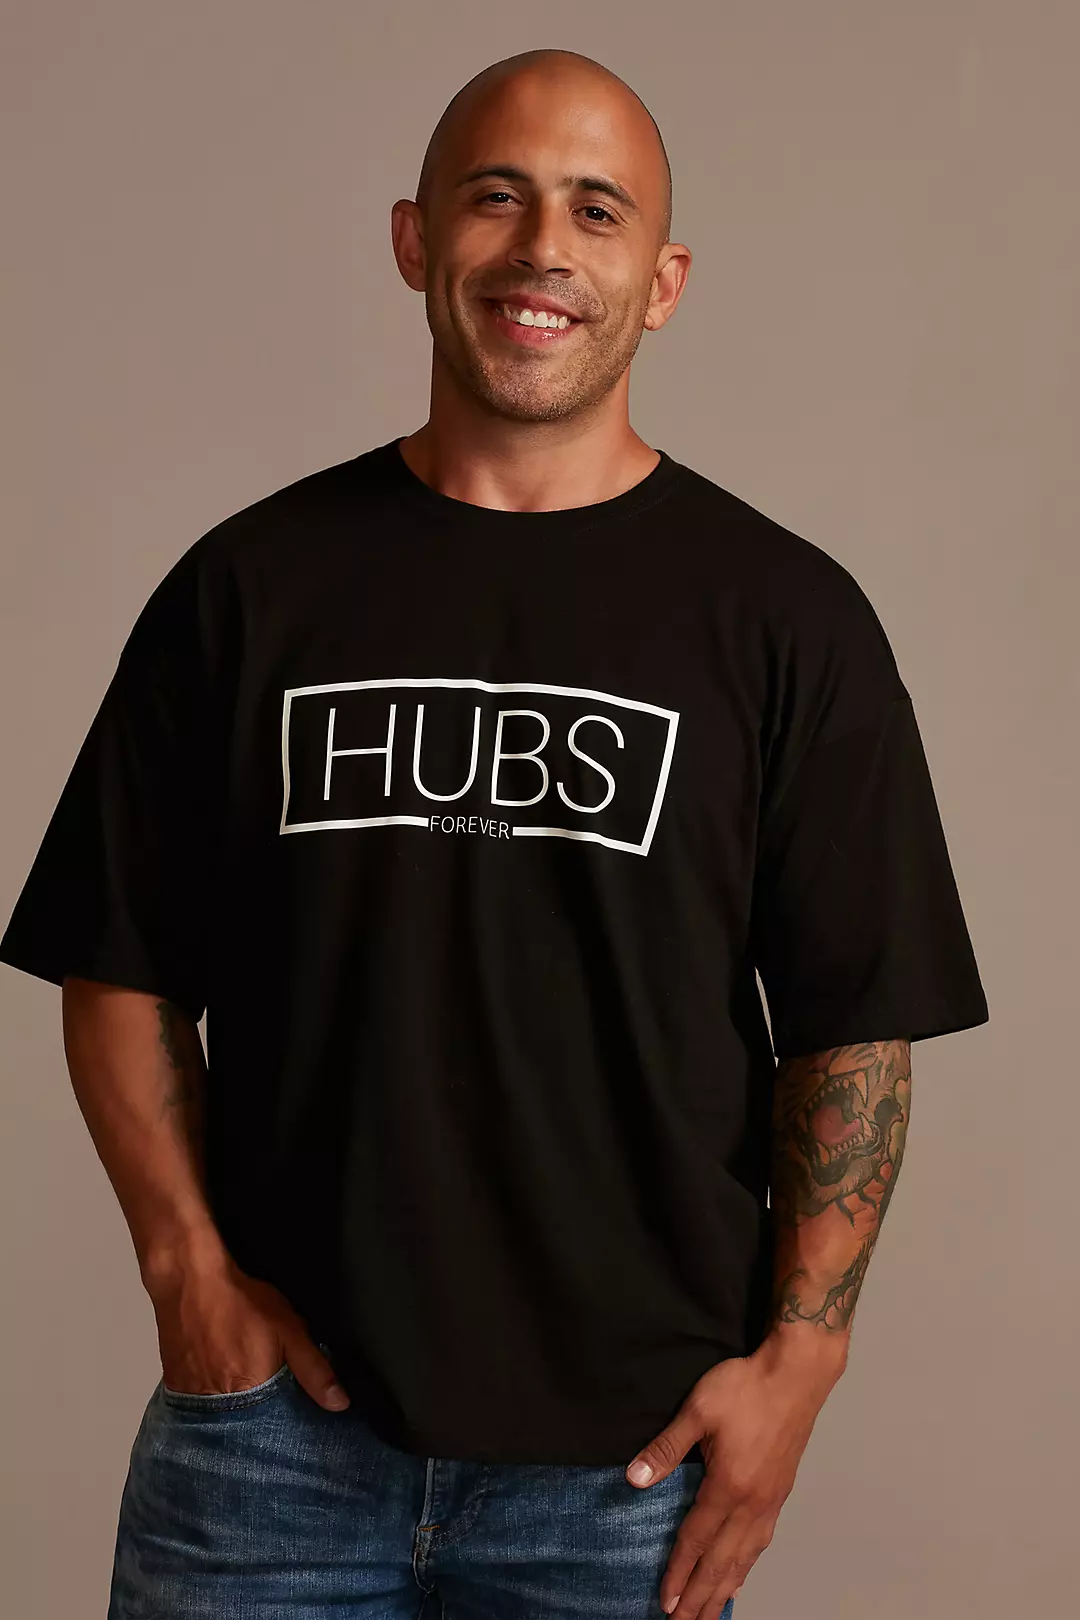 Hubs Forever T-Shirt Image